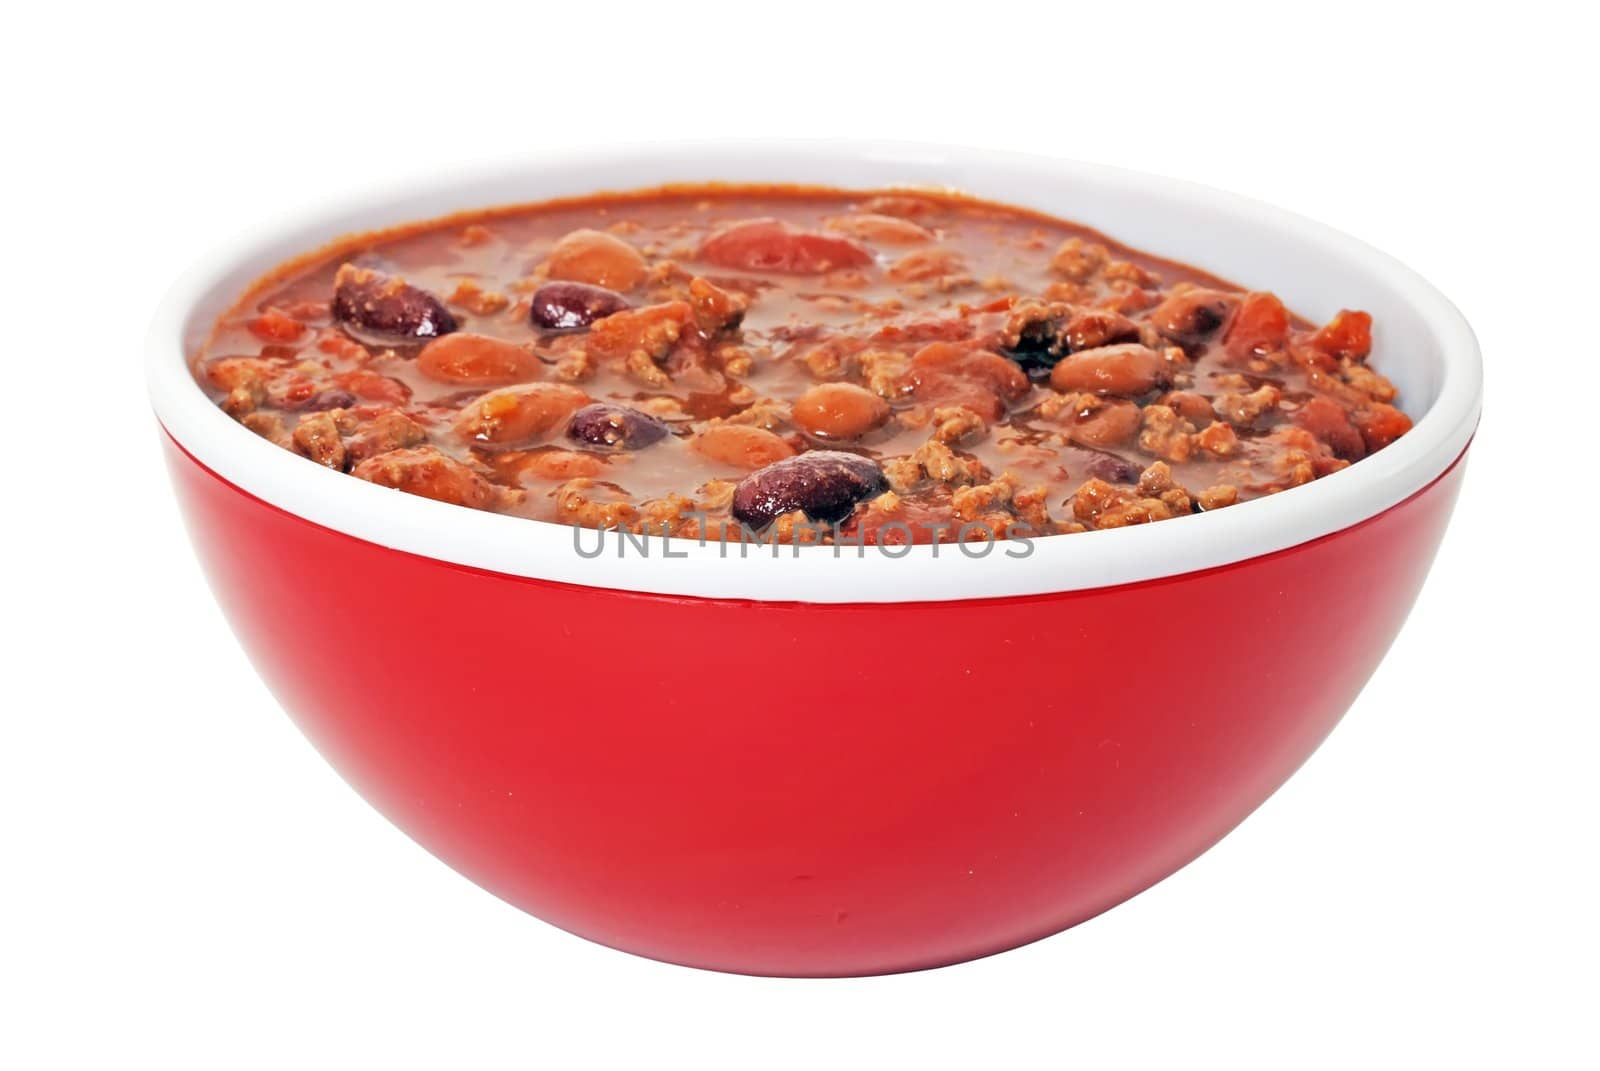 Bowl of chili isolated on white background.